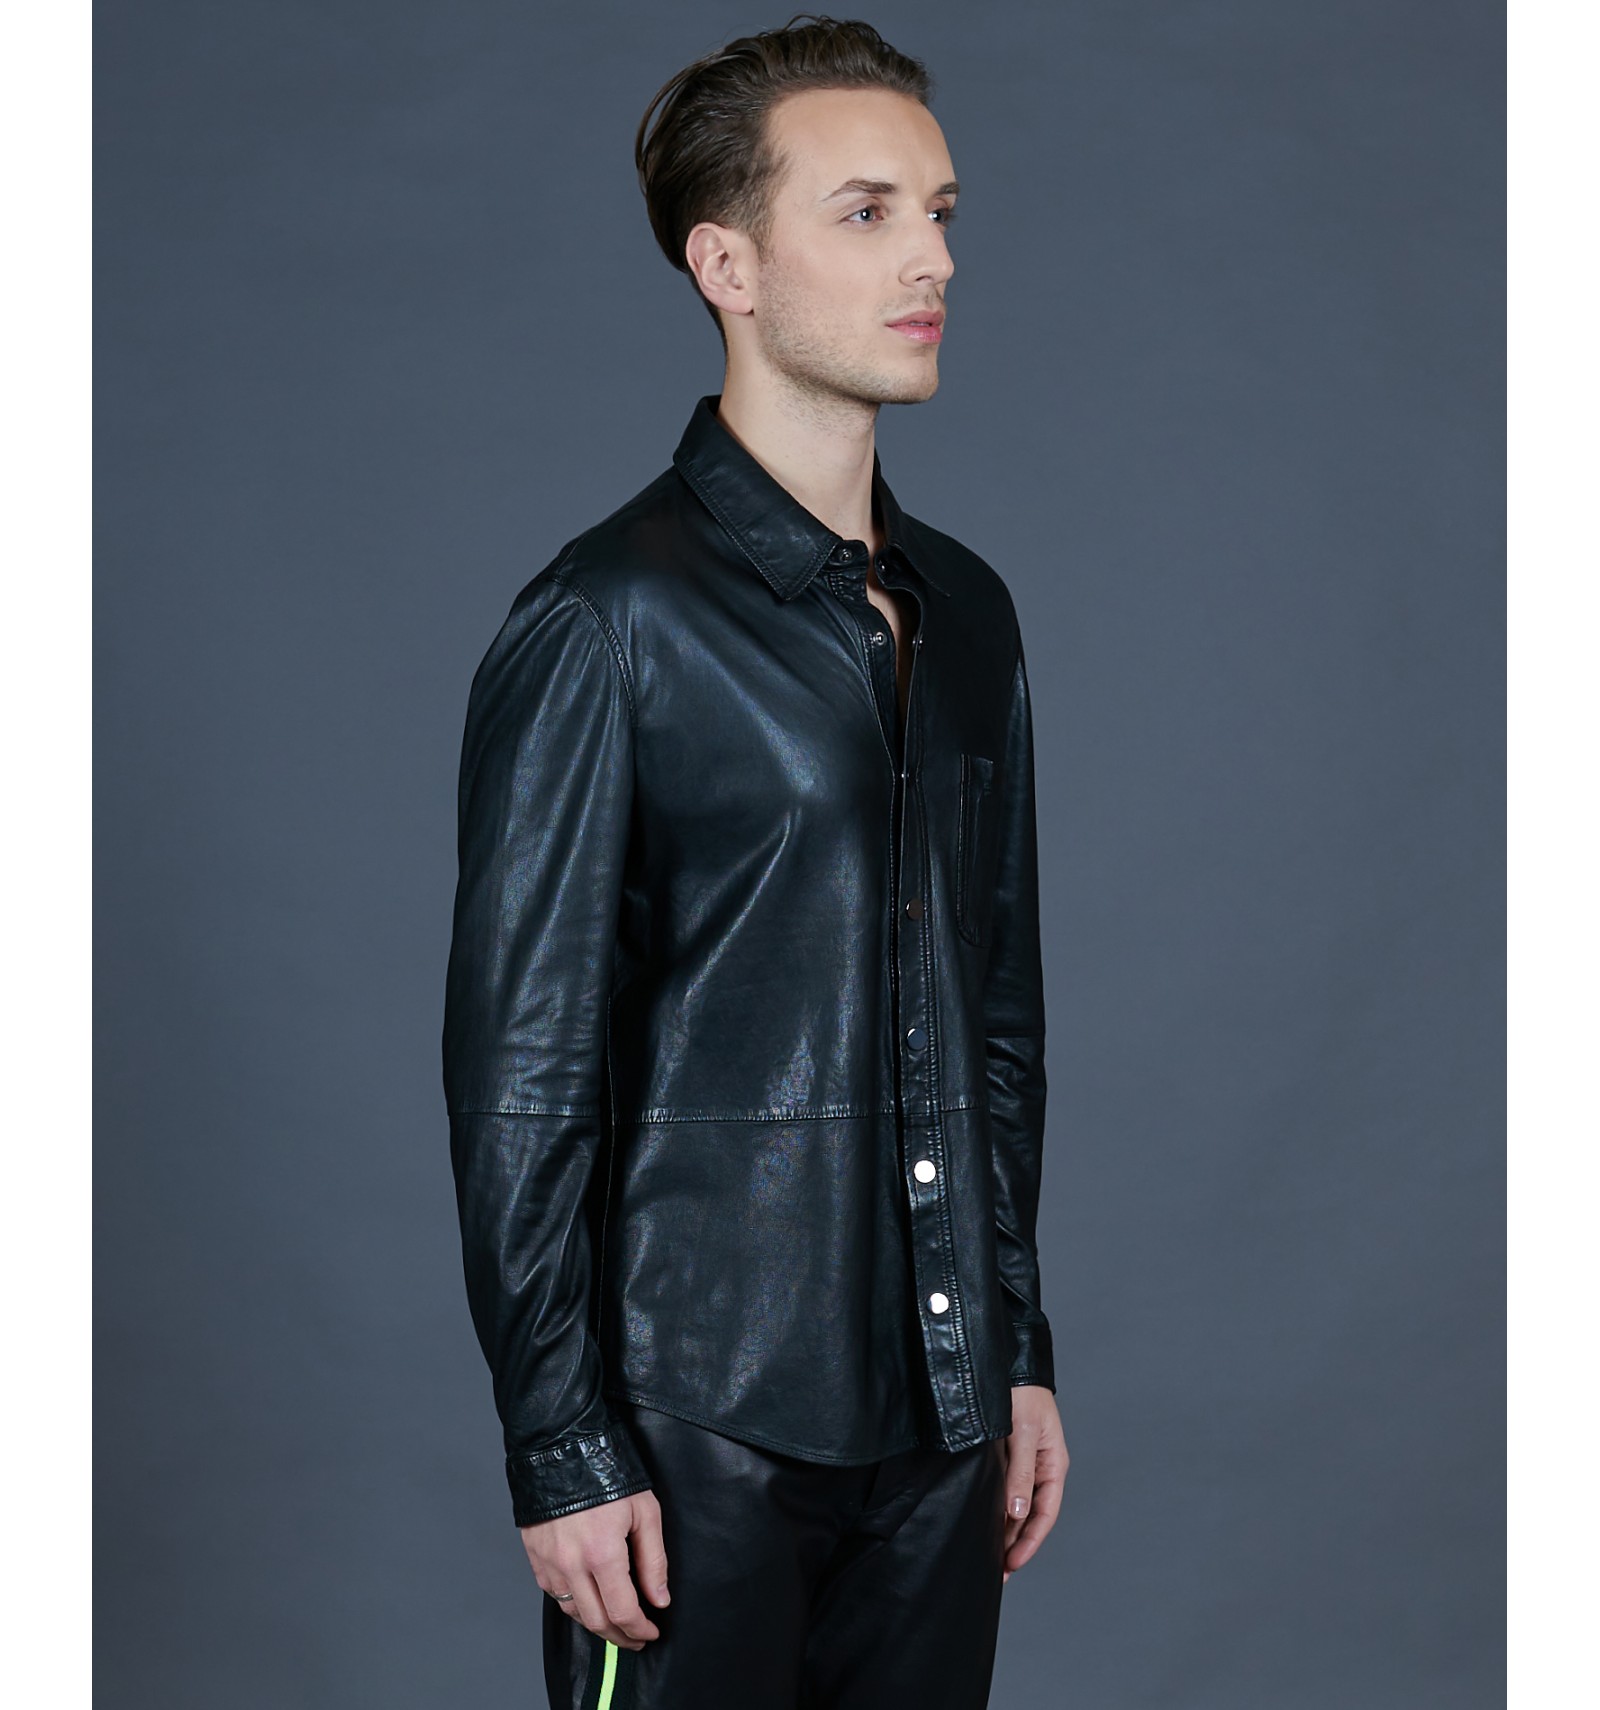 Men leather shirt black leather shirt Jet|AdMilano.it